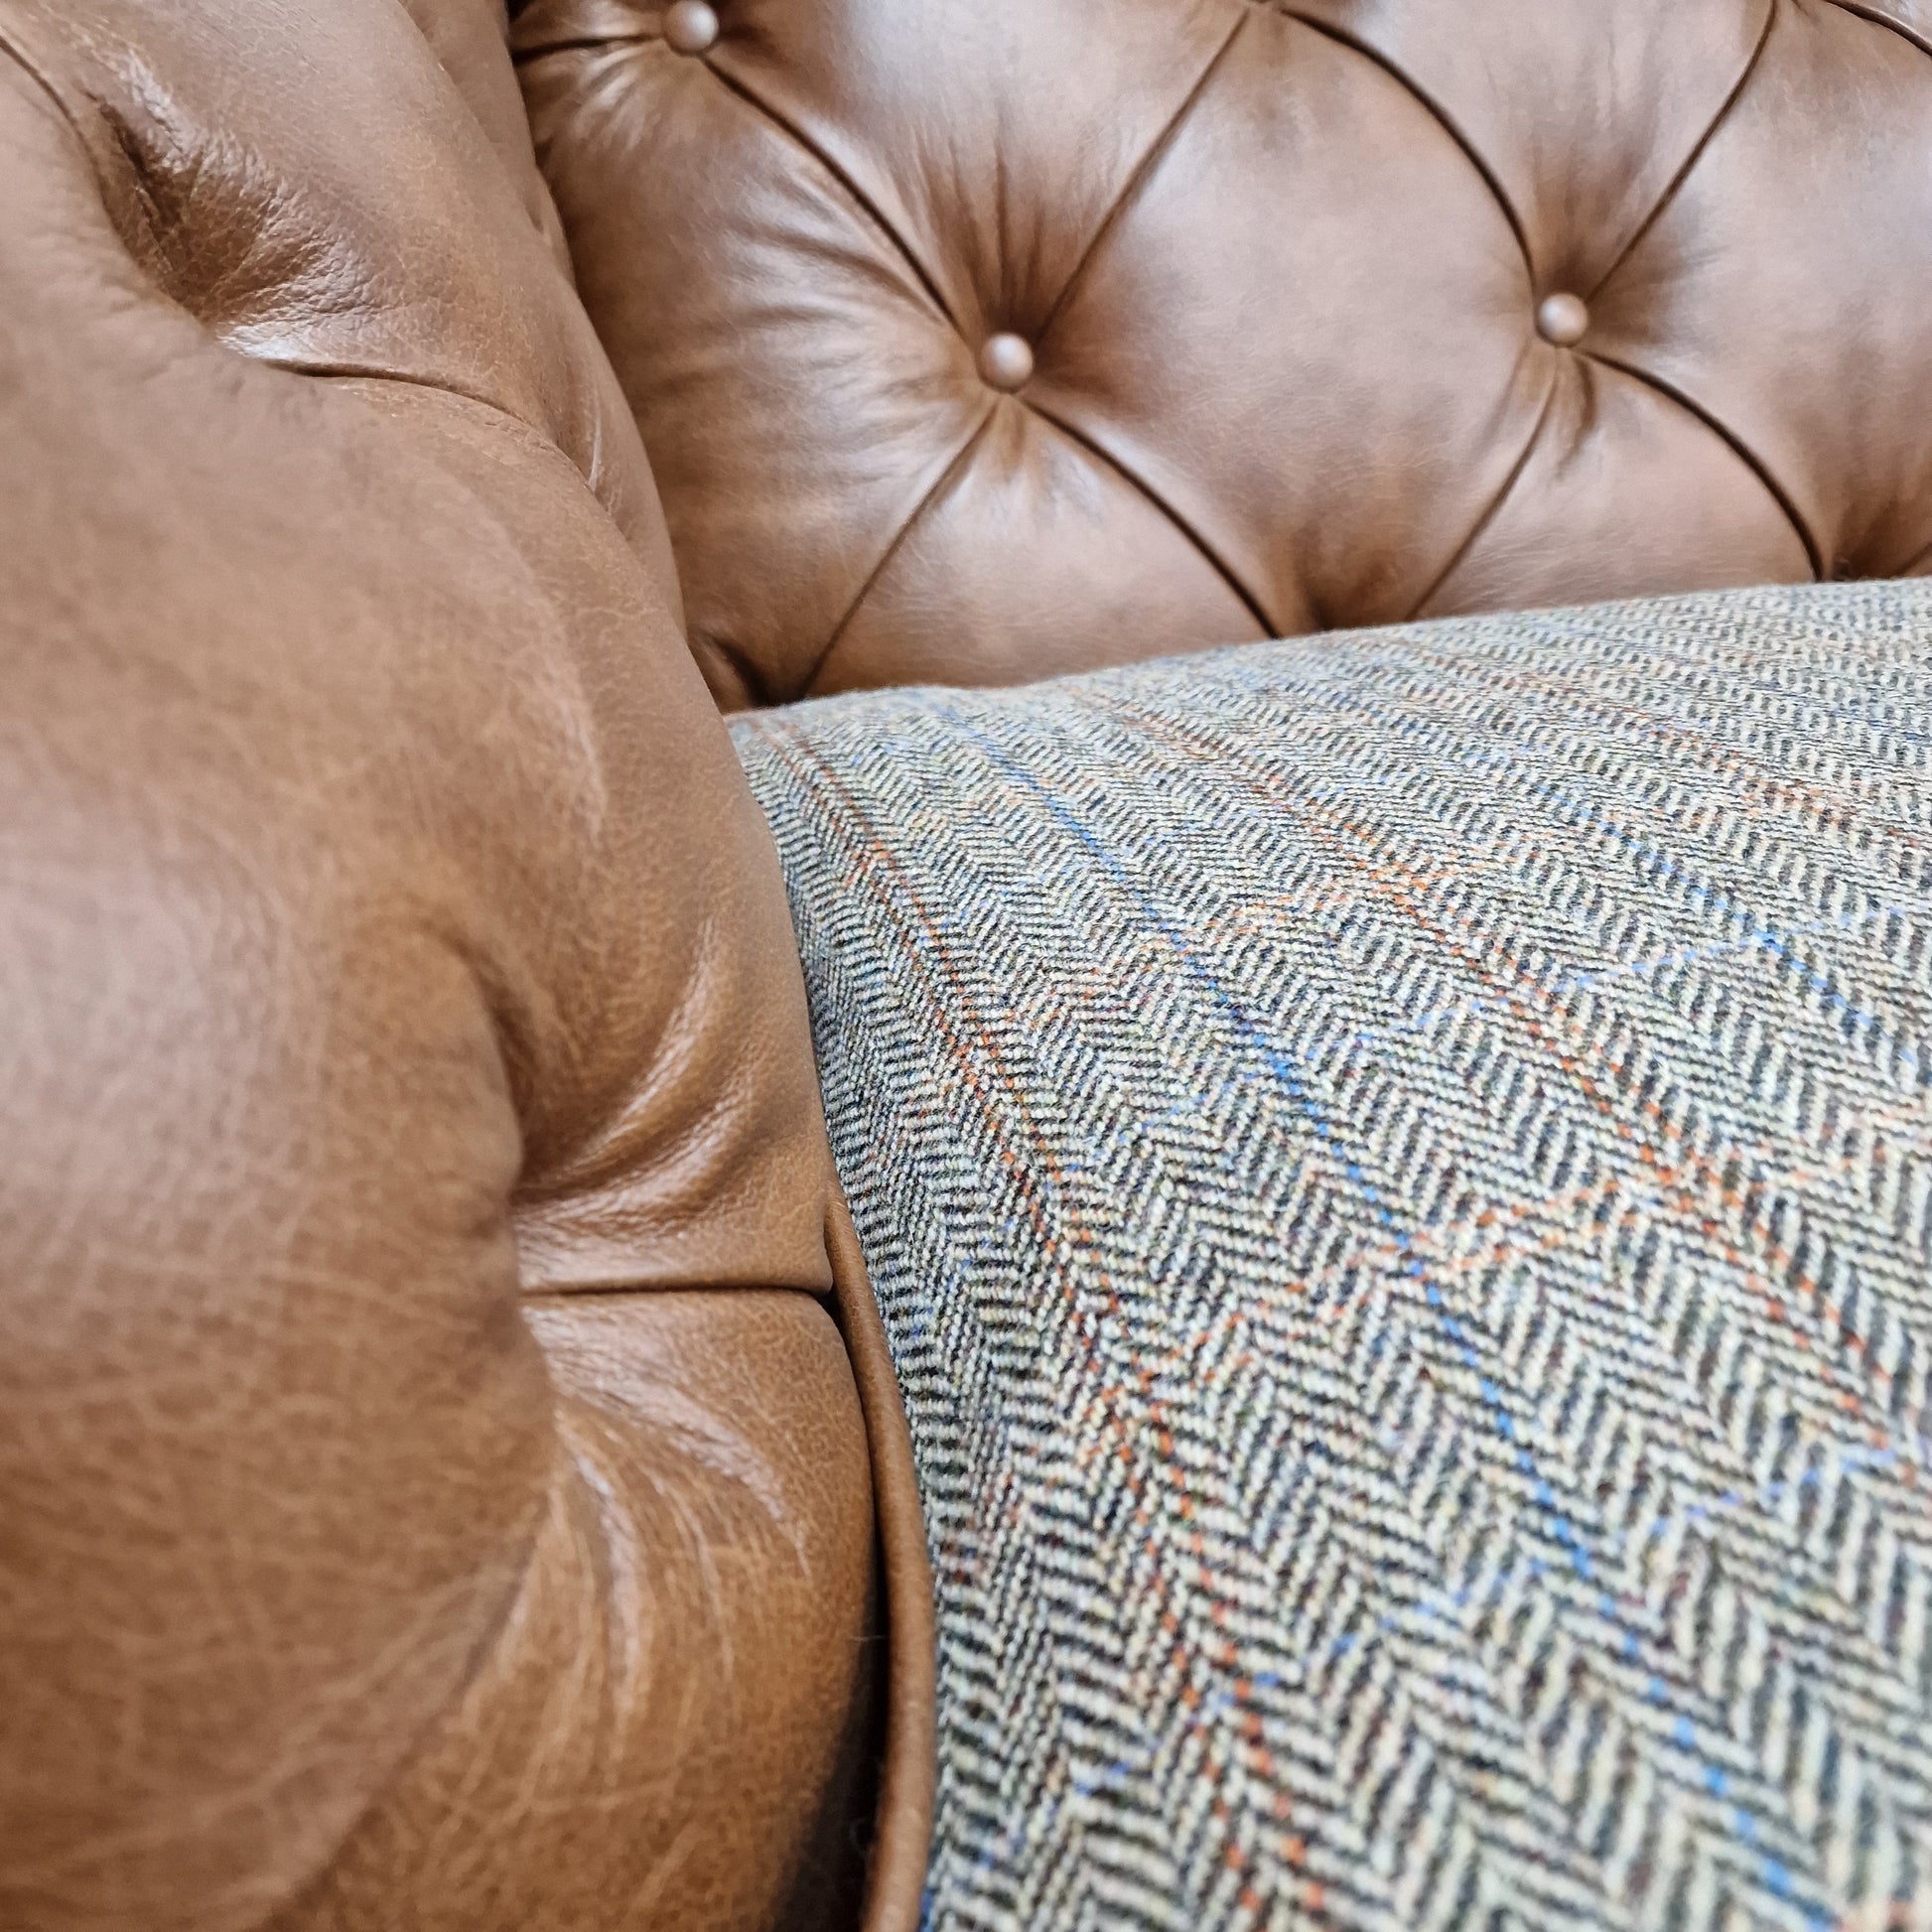 High Back Leather & Harris Tweed | Easdale - Rydan Interiors